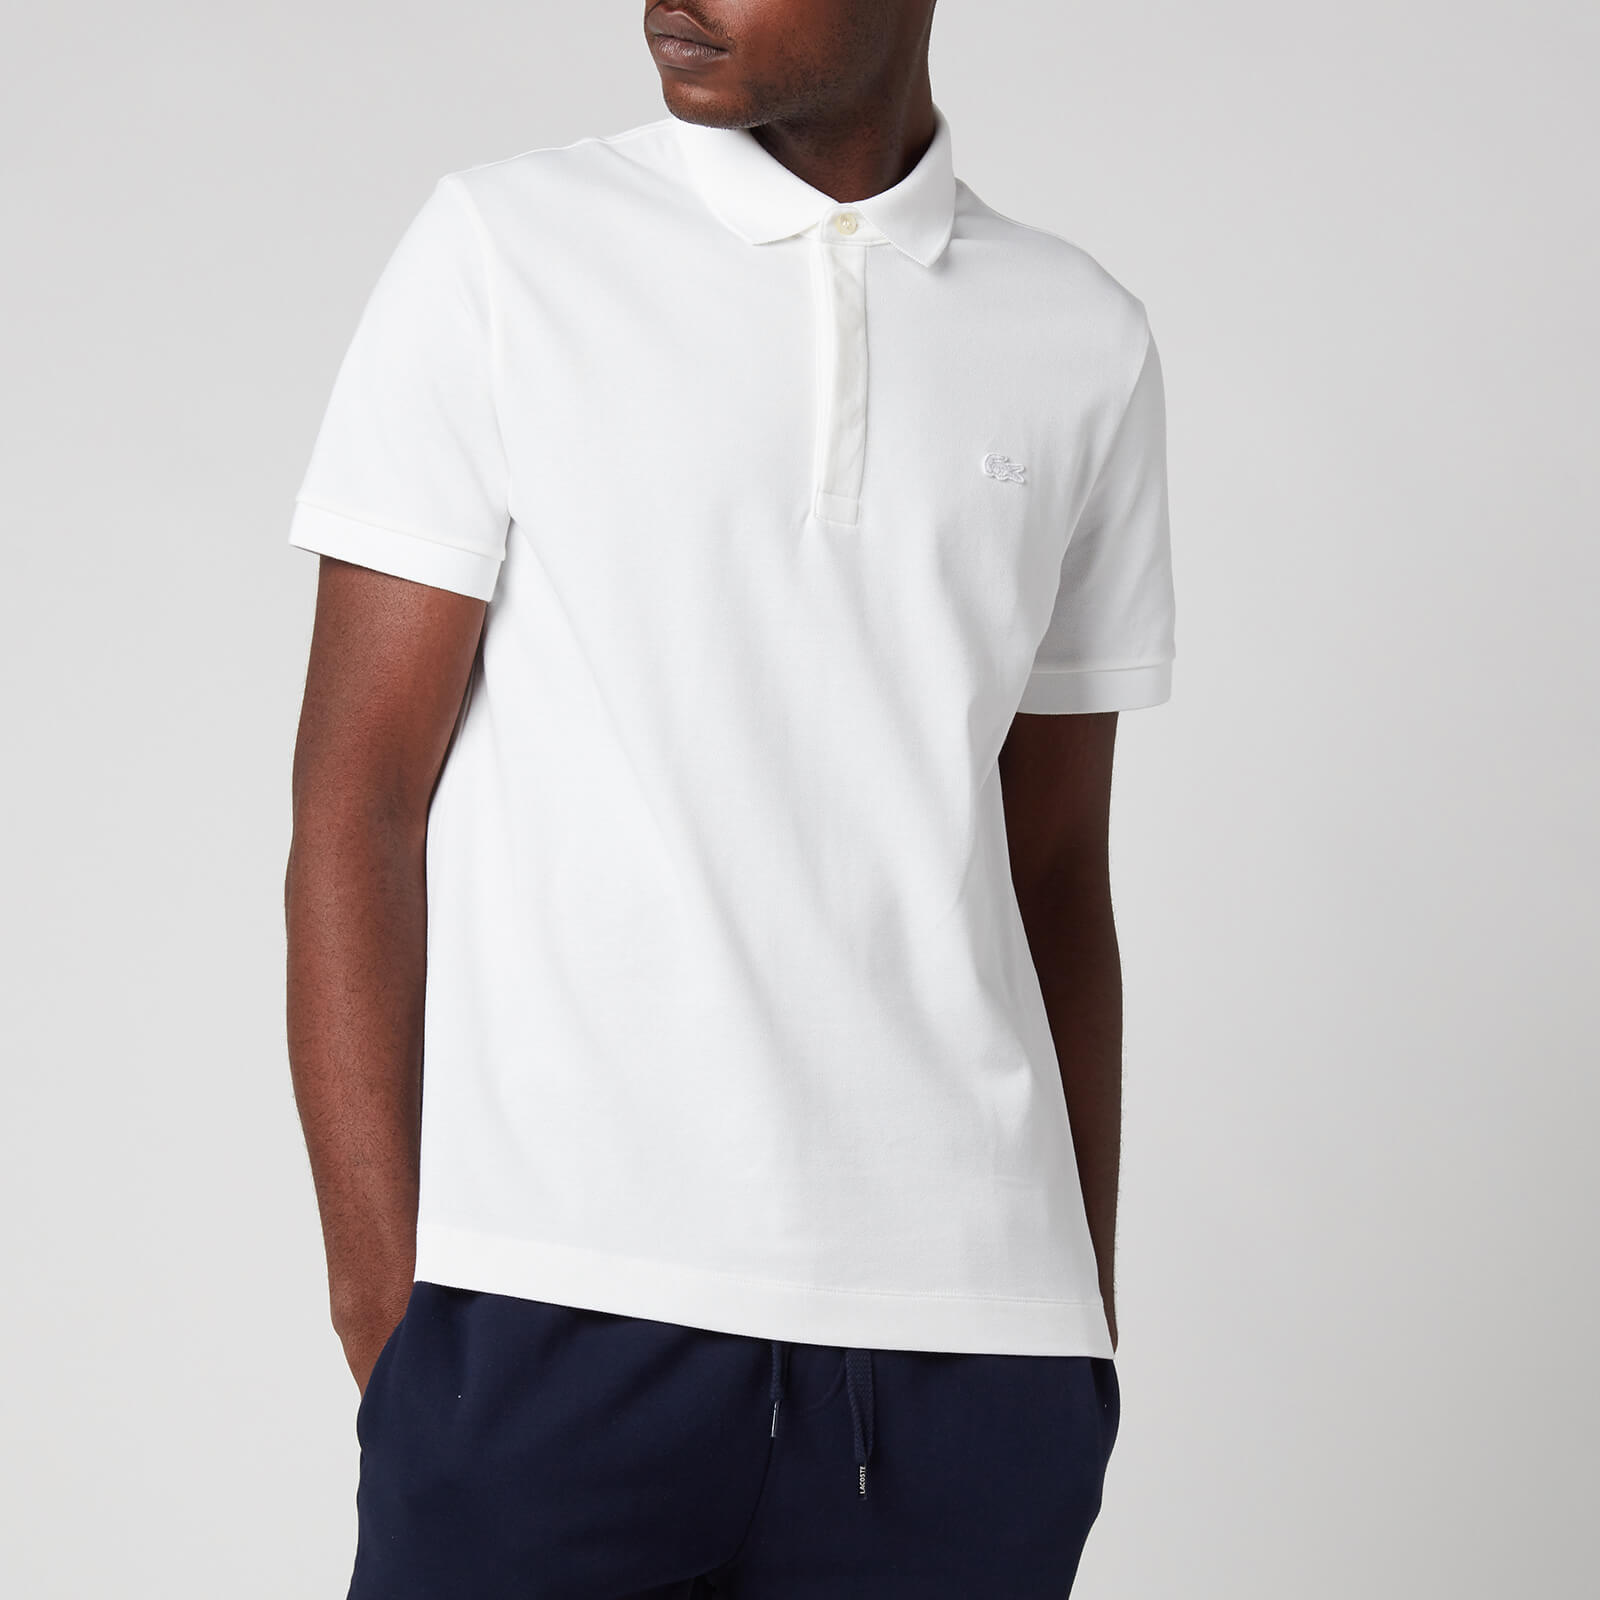 Lacoste Men's Paris Polo Shirt - White - 4/M